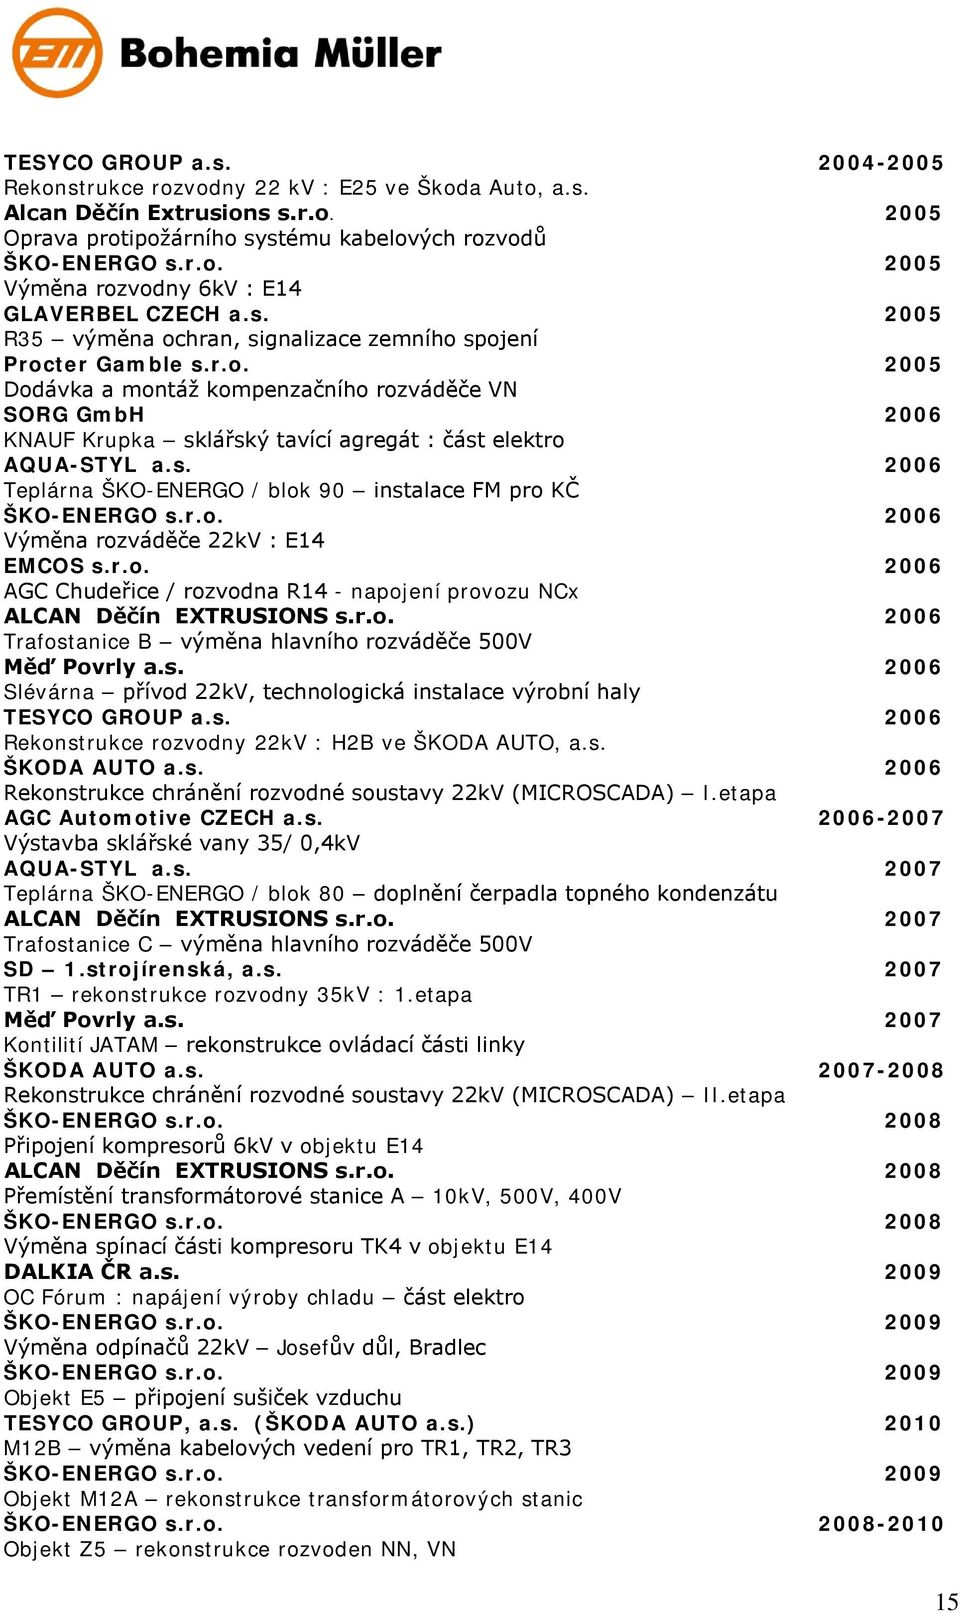 s. 2006 Teplárna ŠKO-ENERGO / blok 90 instalace FM pro KČ ŠKO-ENERGO s.r.o. 2006 Výměna rozváděče 22kV : E14 EMCOS s.r.o. 2006 AGC Chudeřice / rozvodna R14 - napojení provozu NCx ALCAN Děčín EXTRUSIONS s.